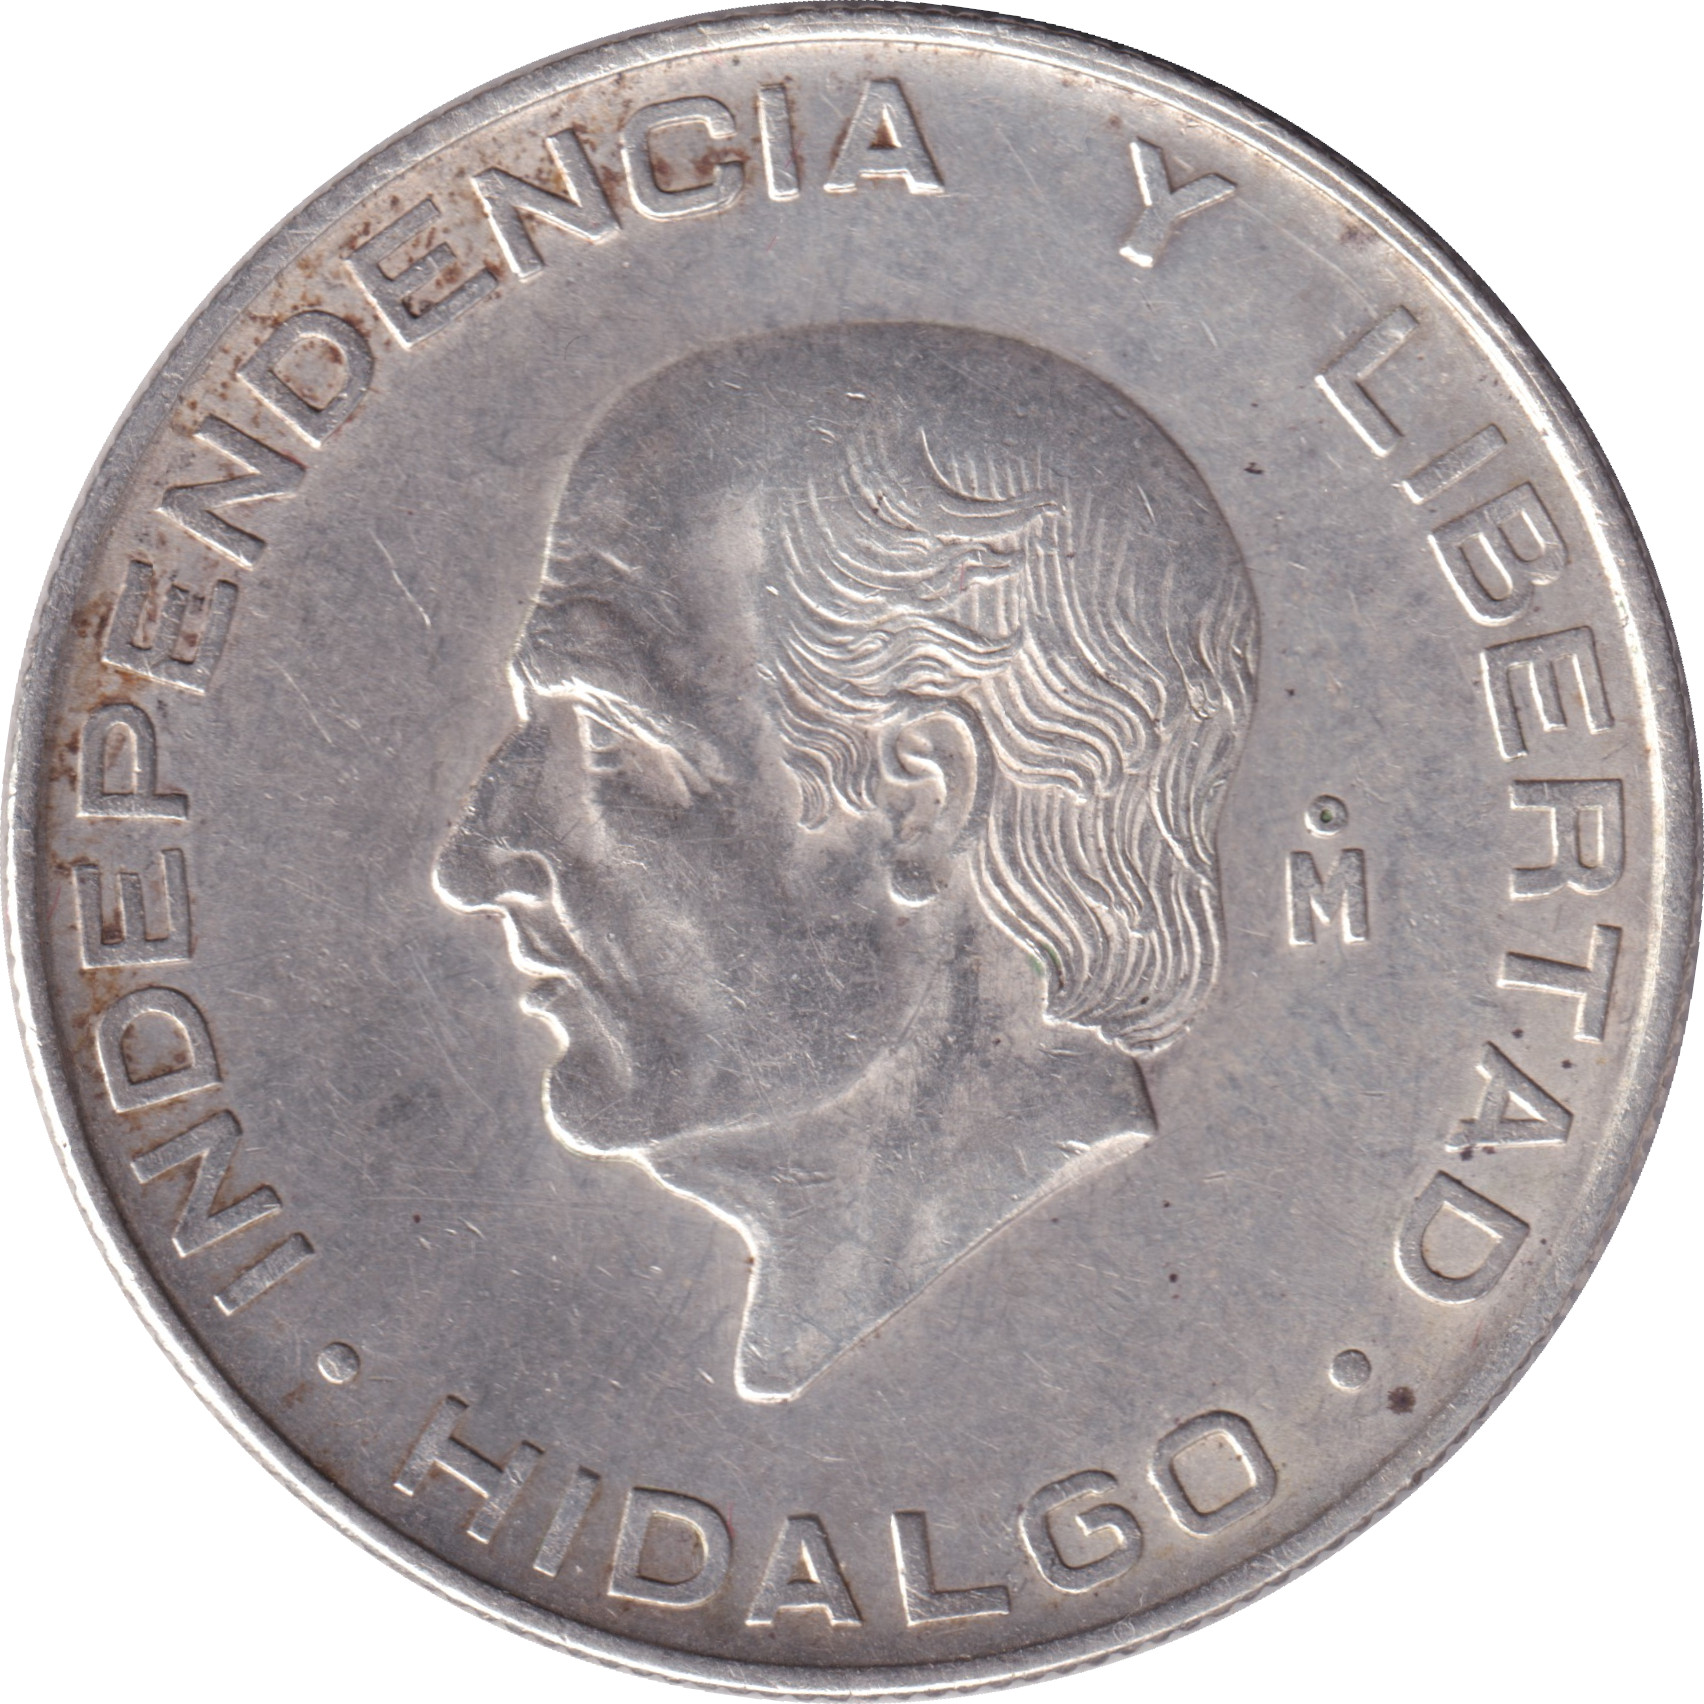 5 pesos - Indépendance et Liberté